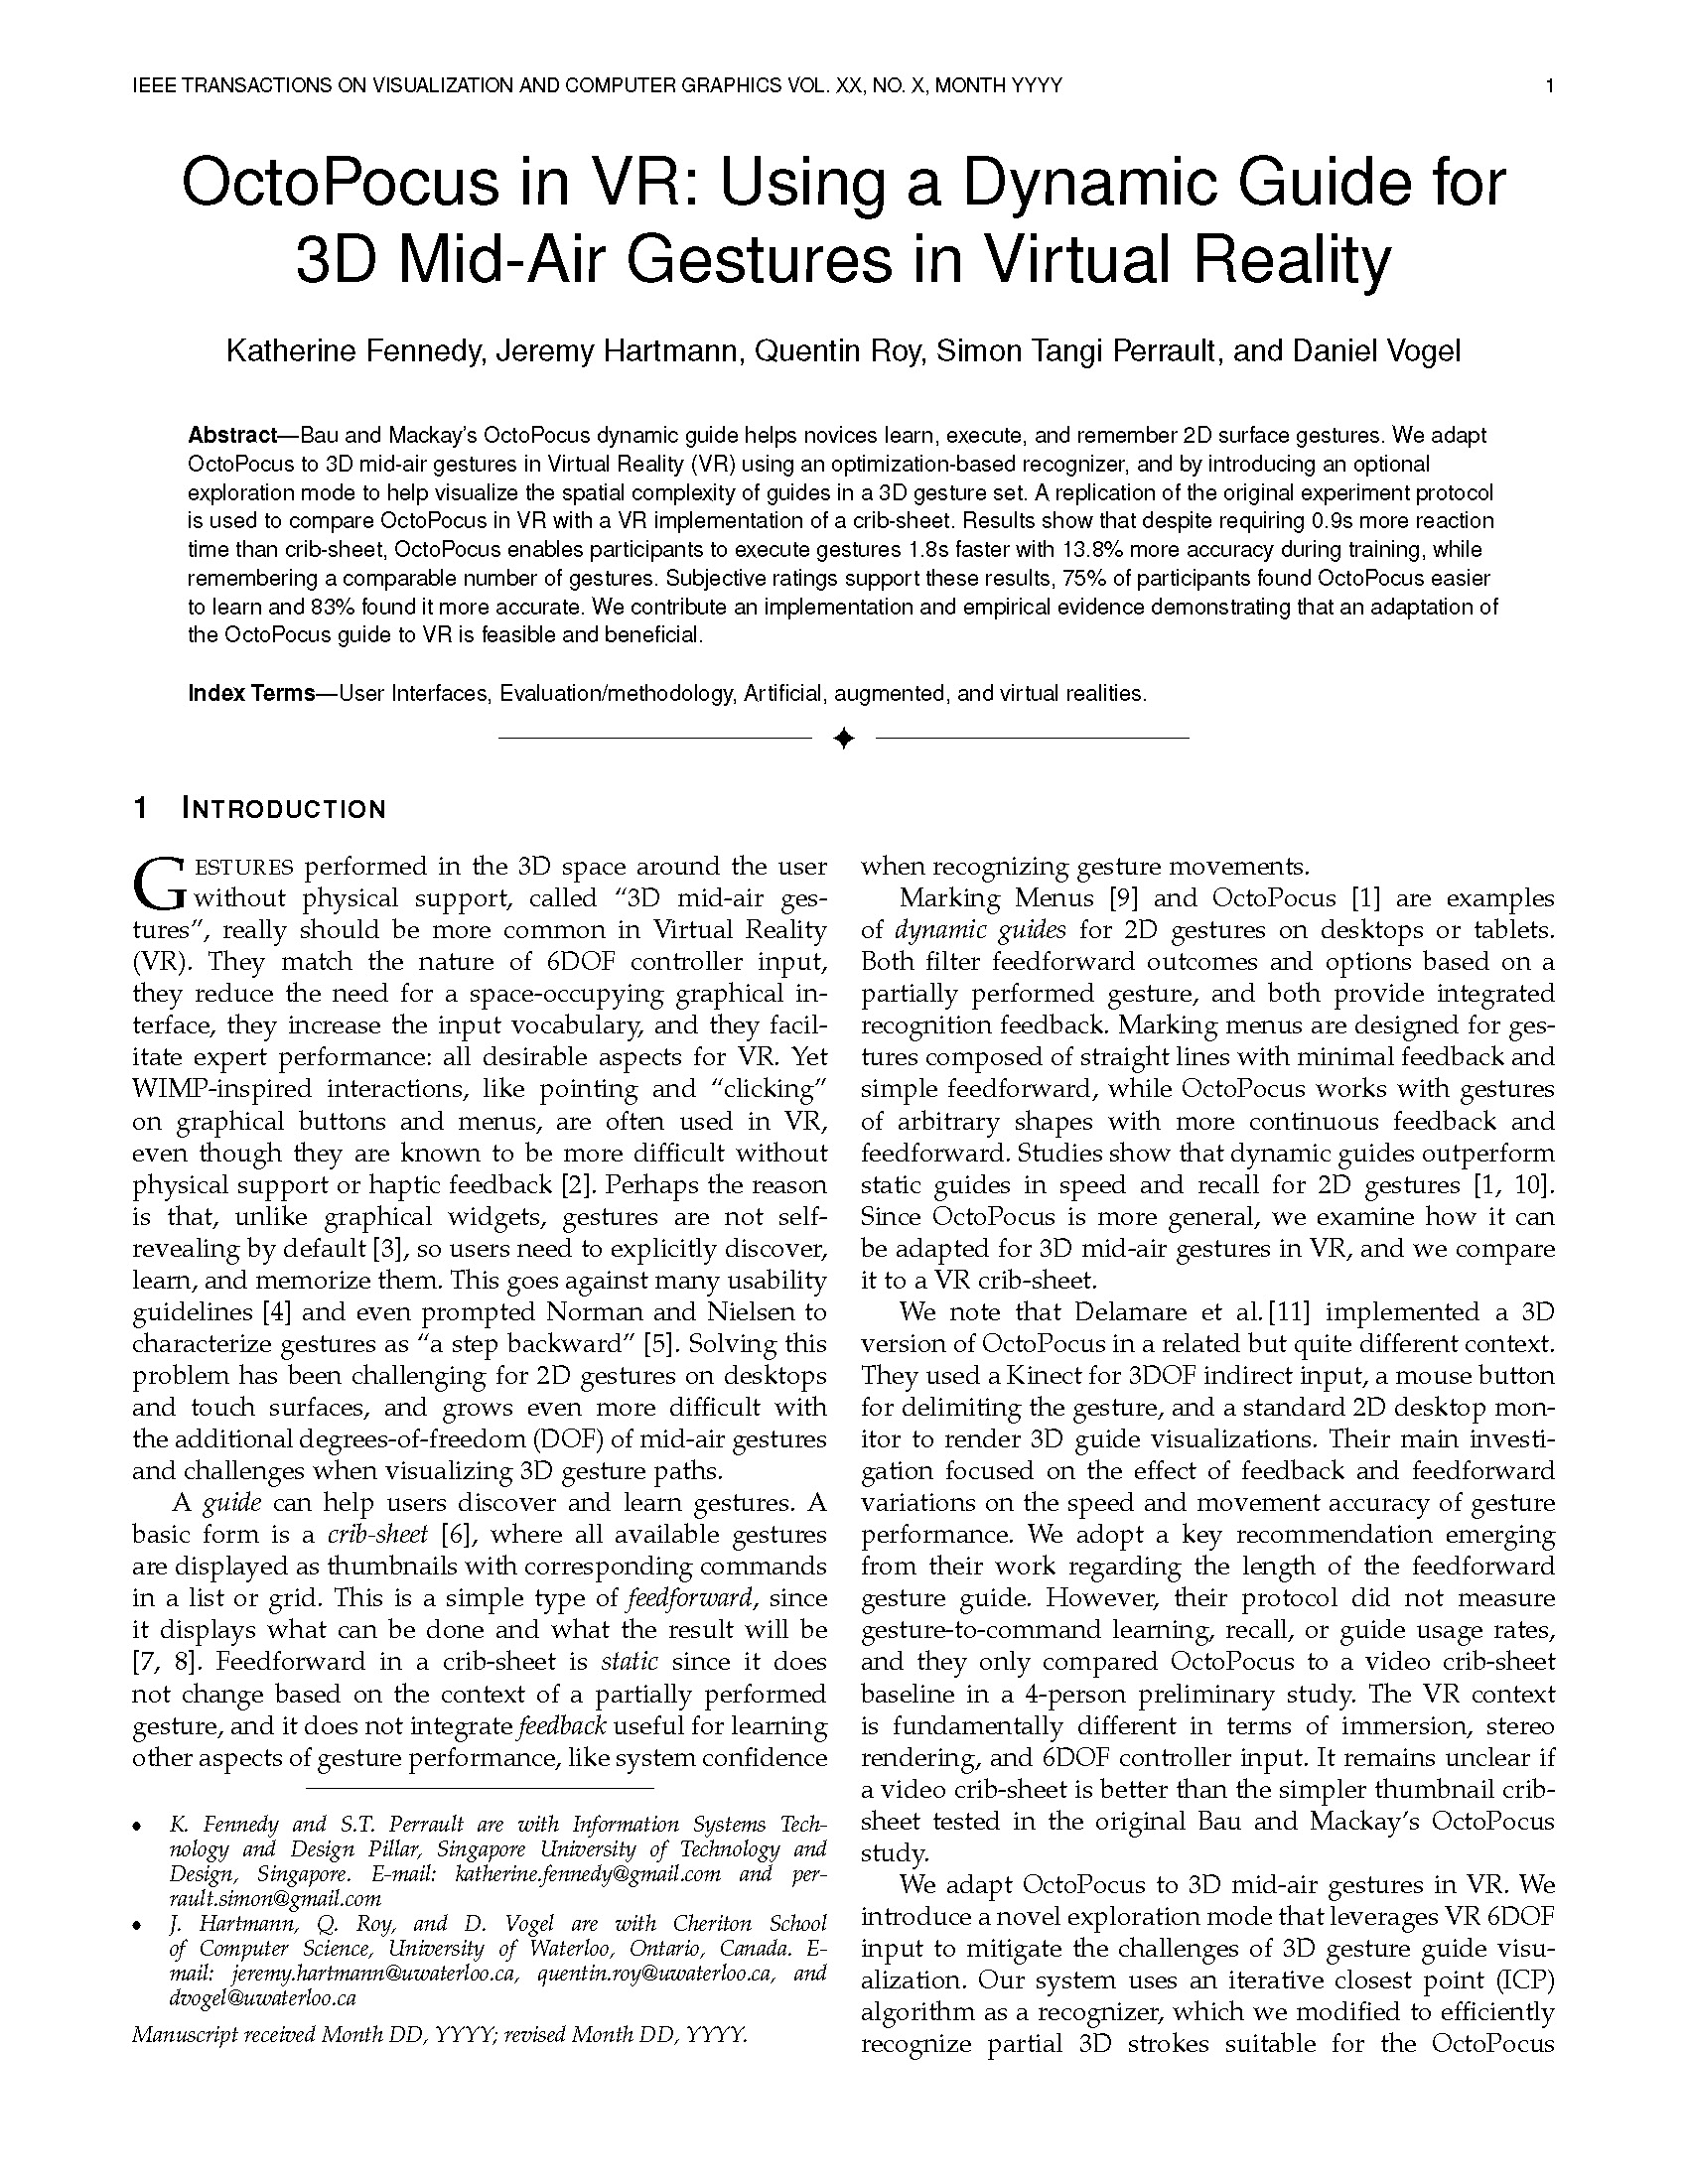 Download OctoPocus in VR Paper in pdf